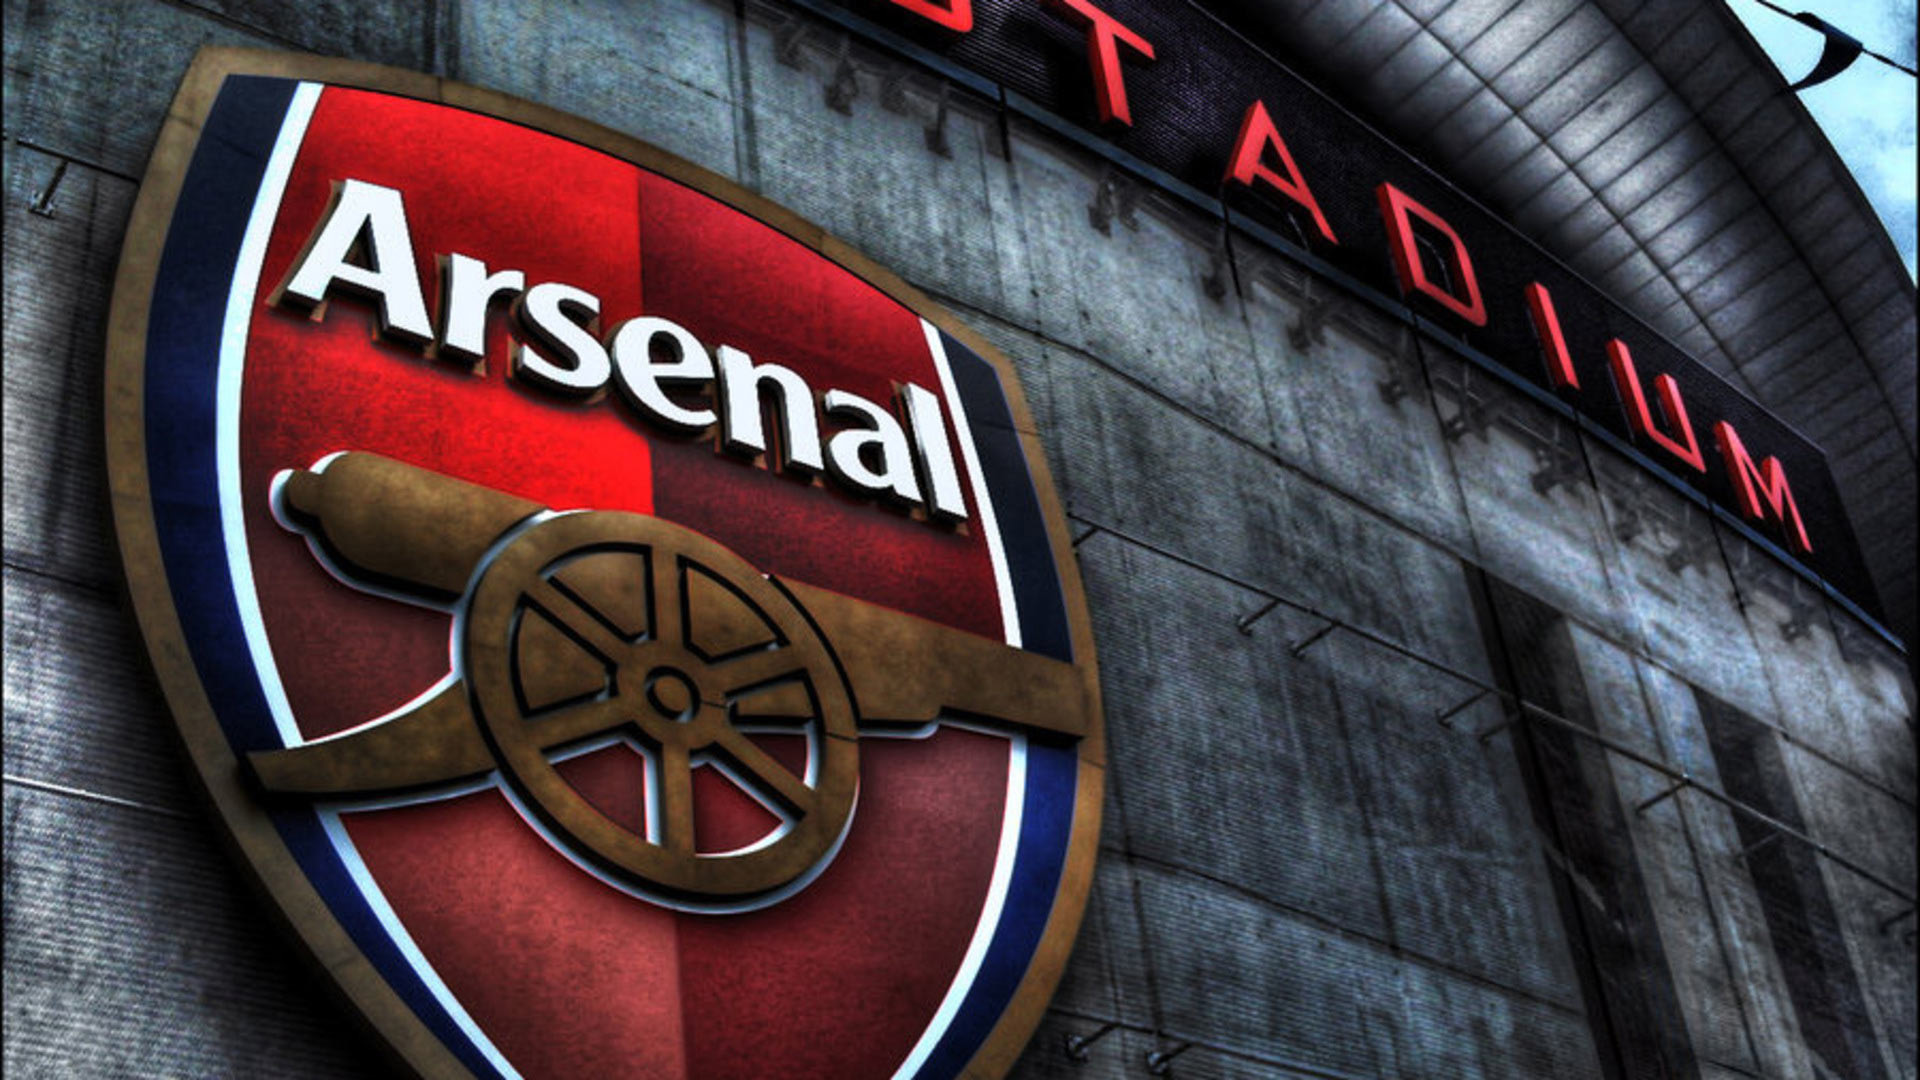 Arsenal FC logo wallpaper